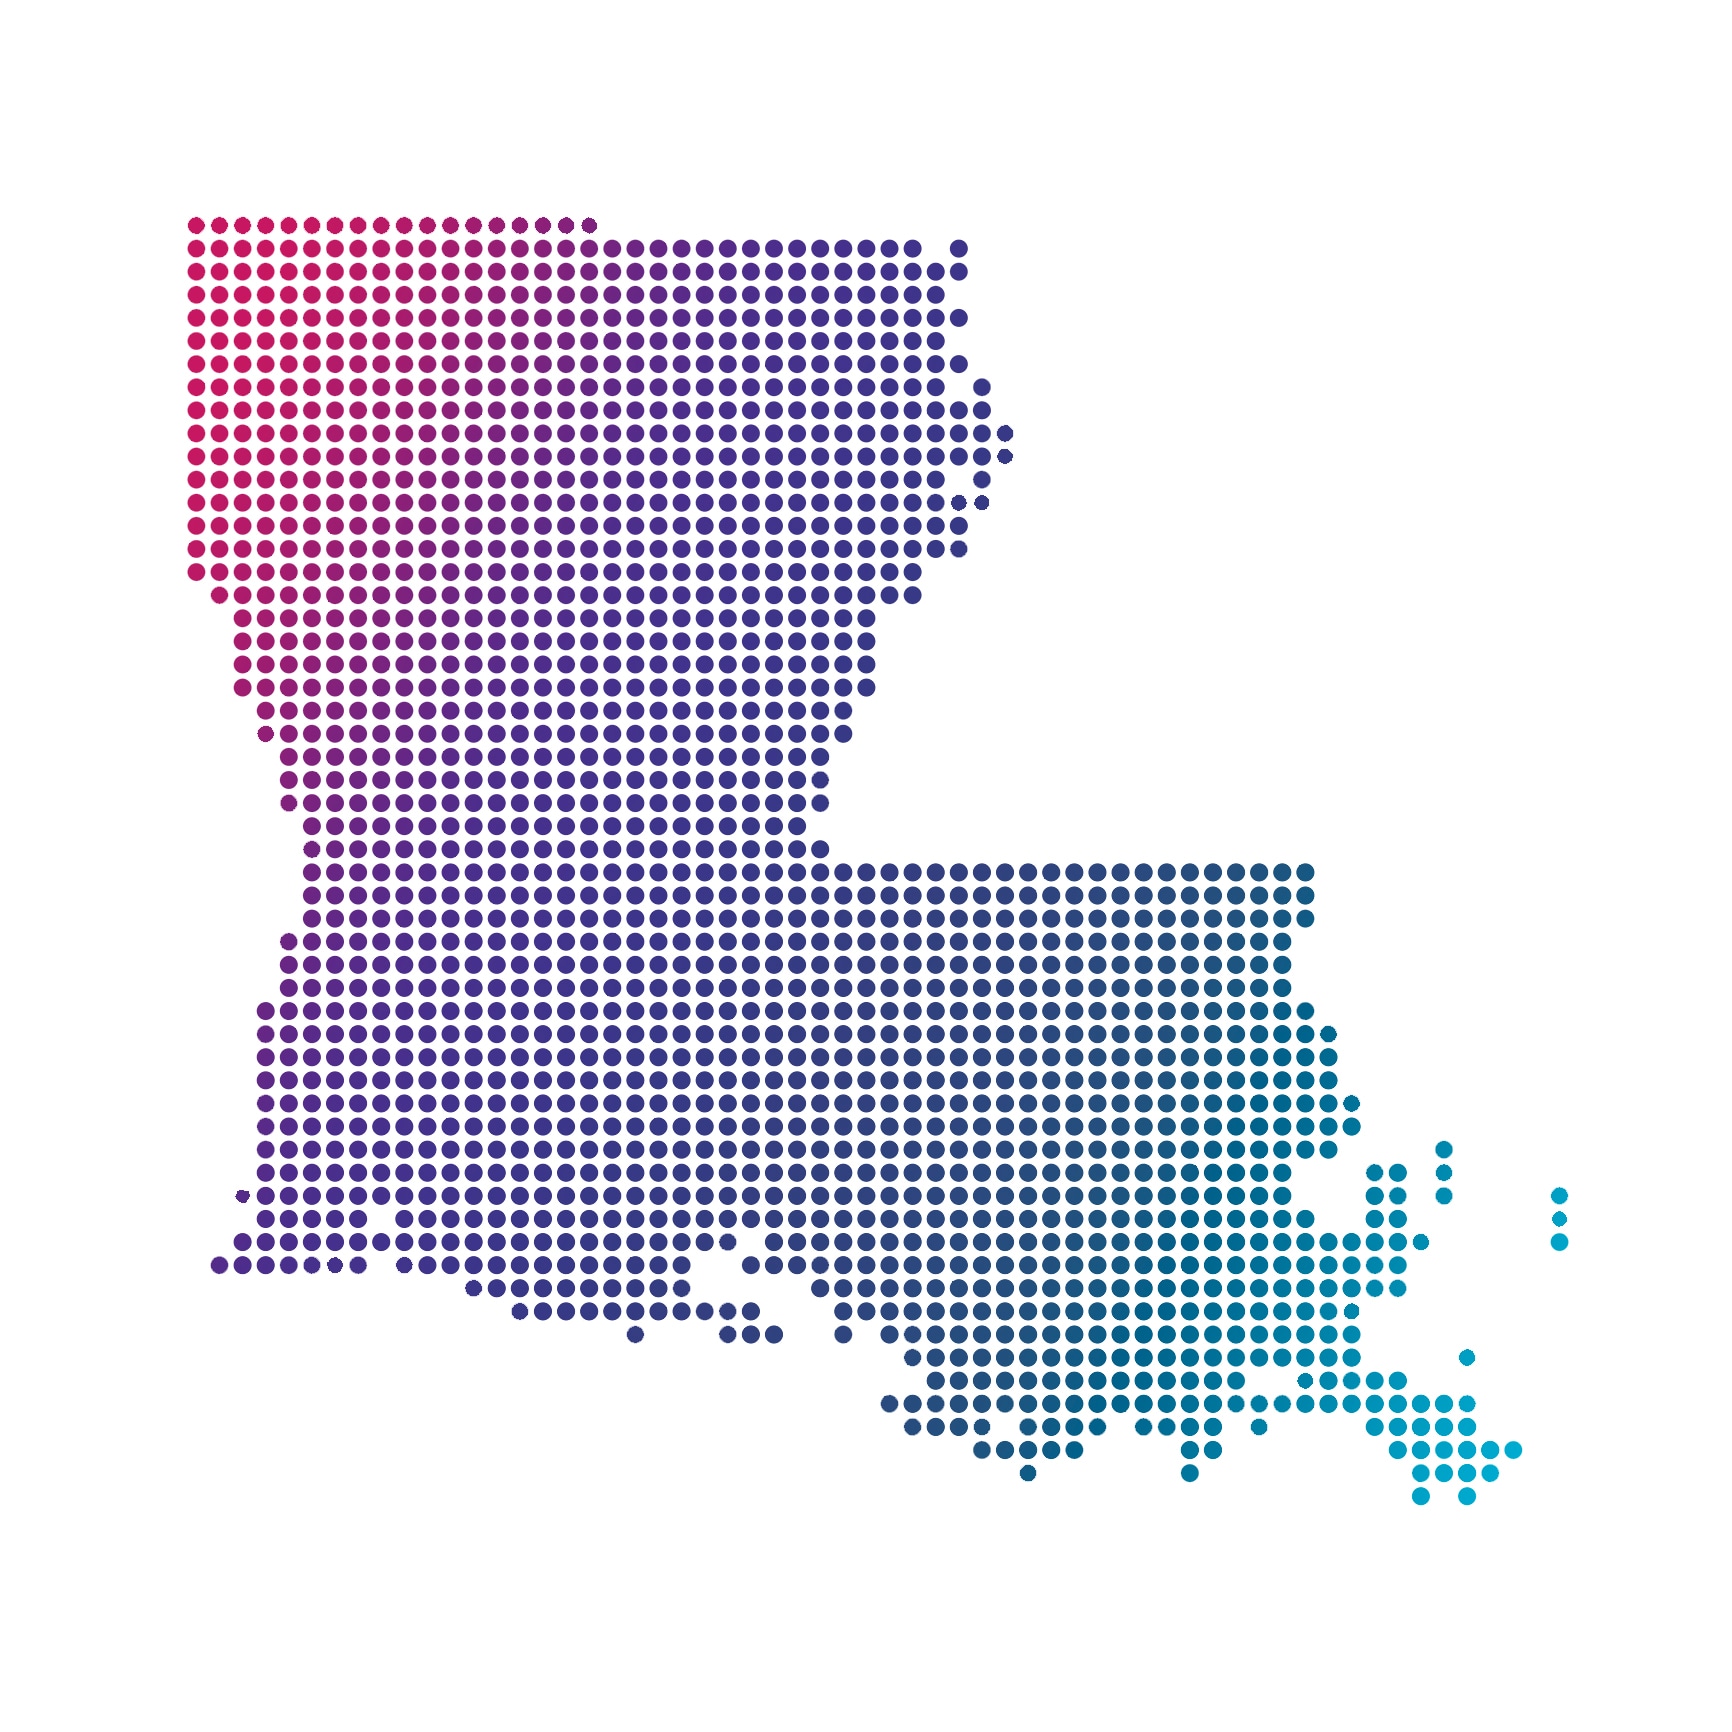 Louisiana map of blue dots on white background